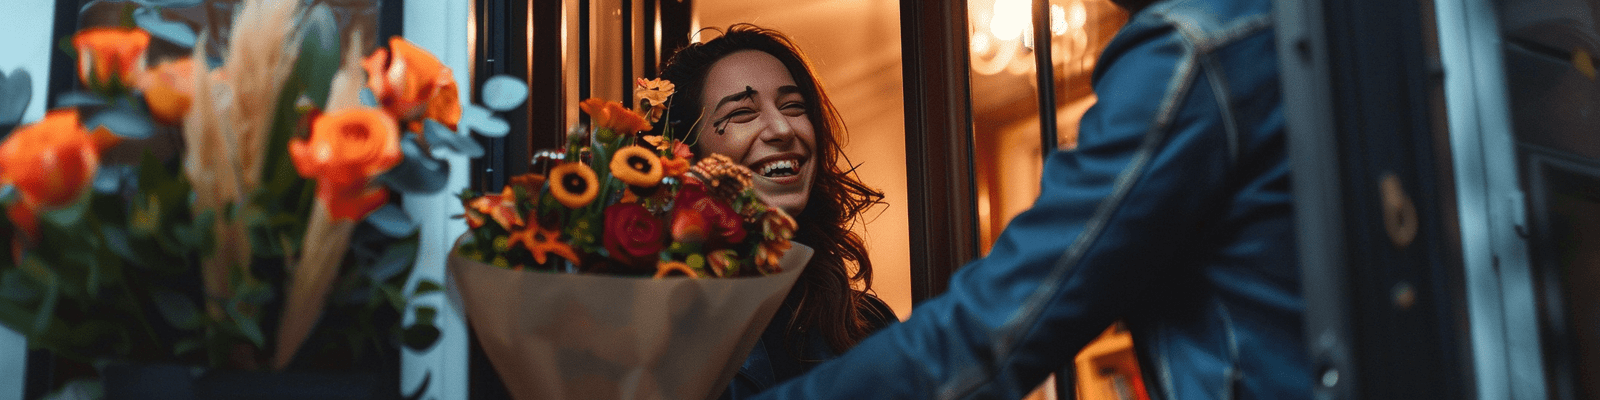 florist delivering flowers to a joyful recipient-min